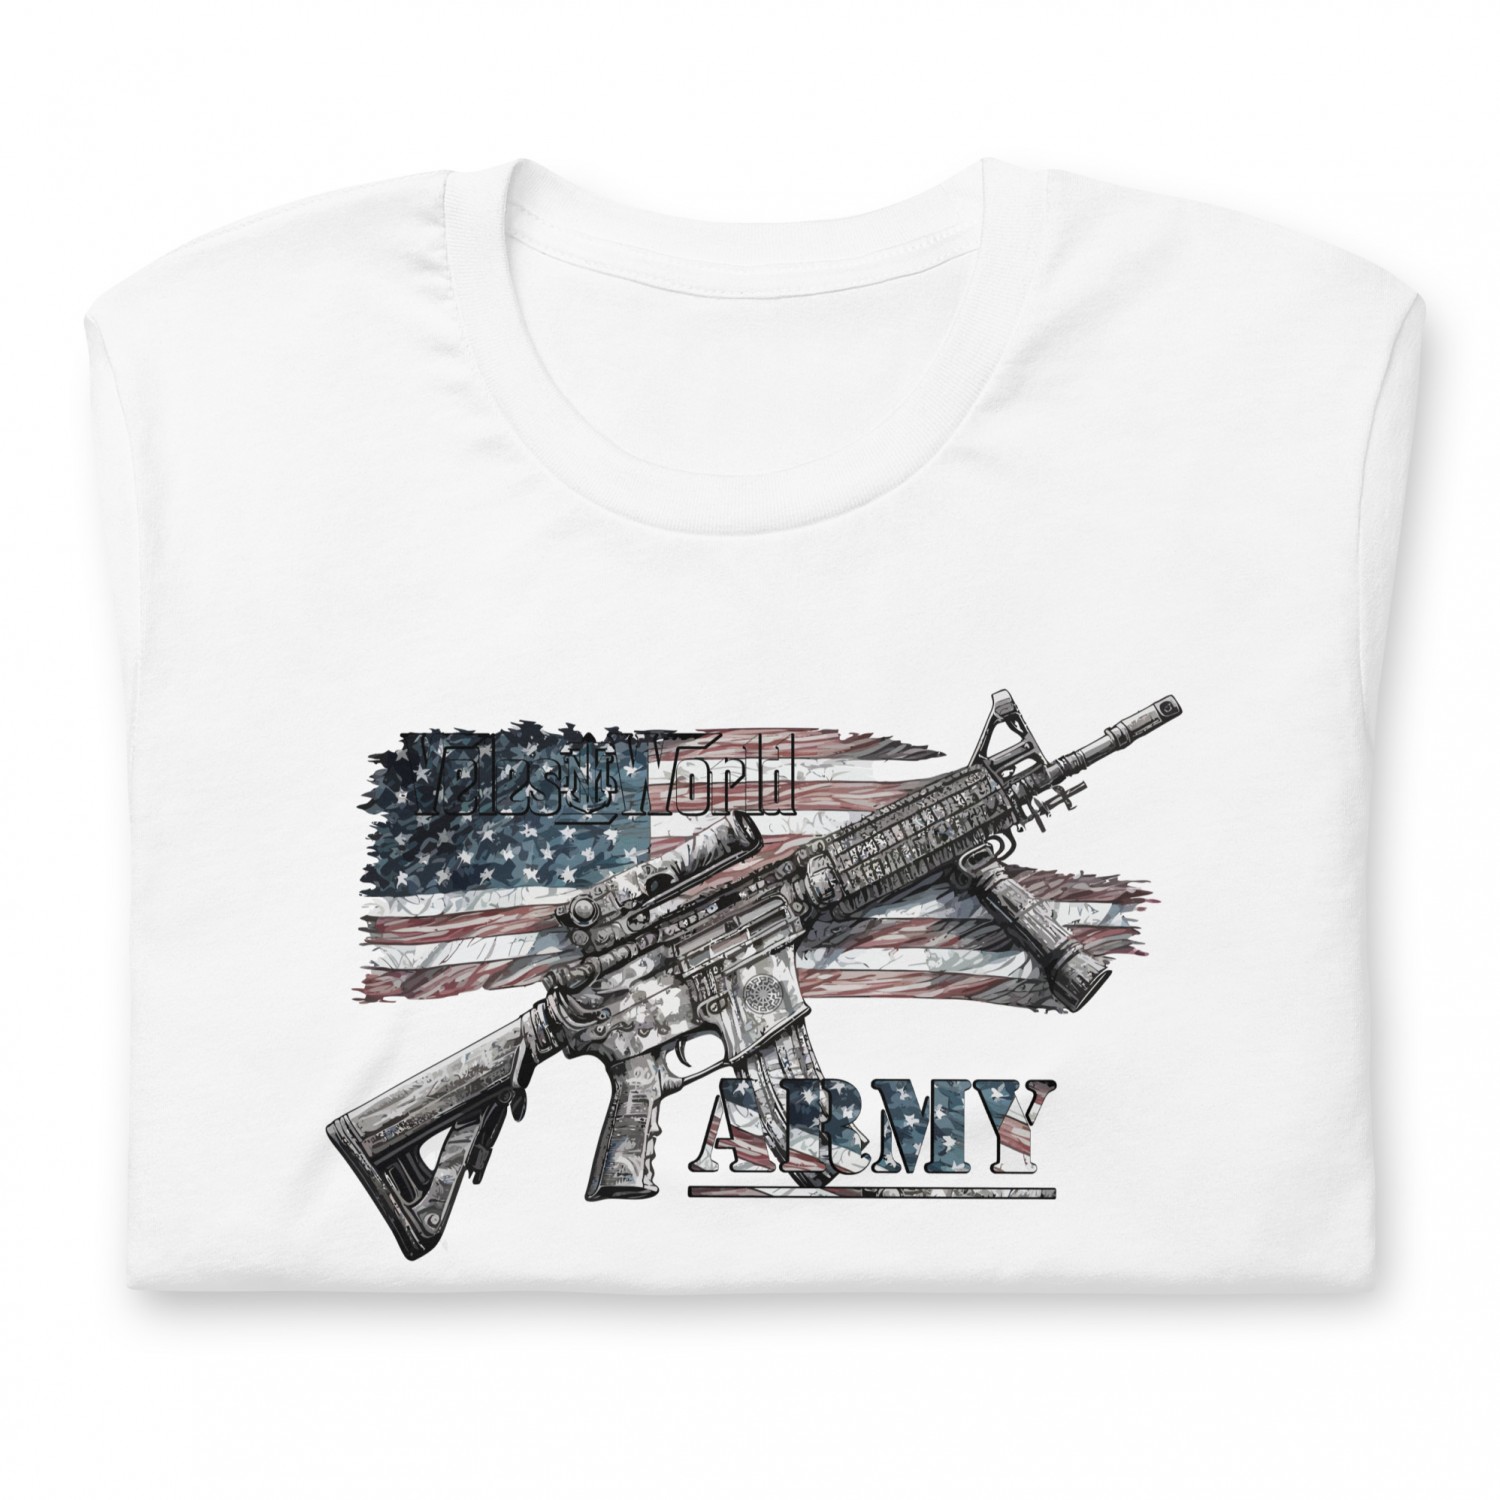 Buy "Army" T-shirt